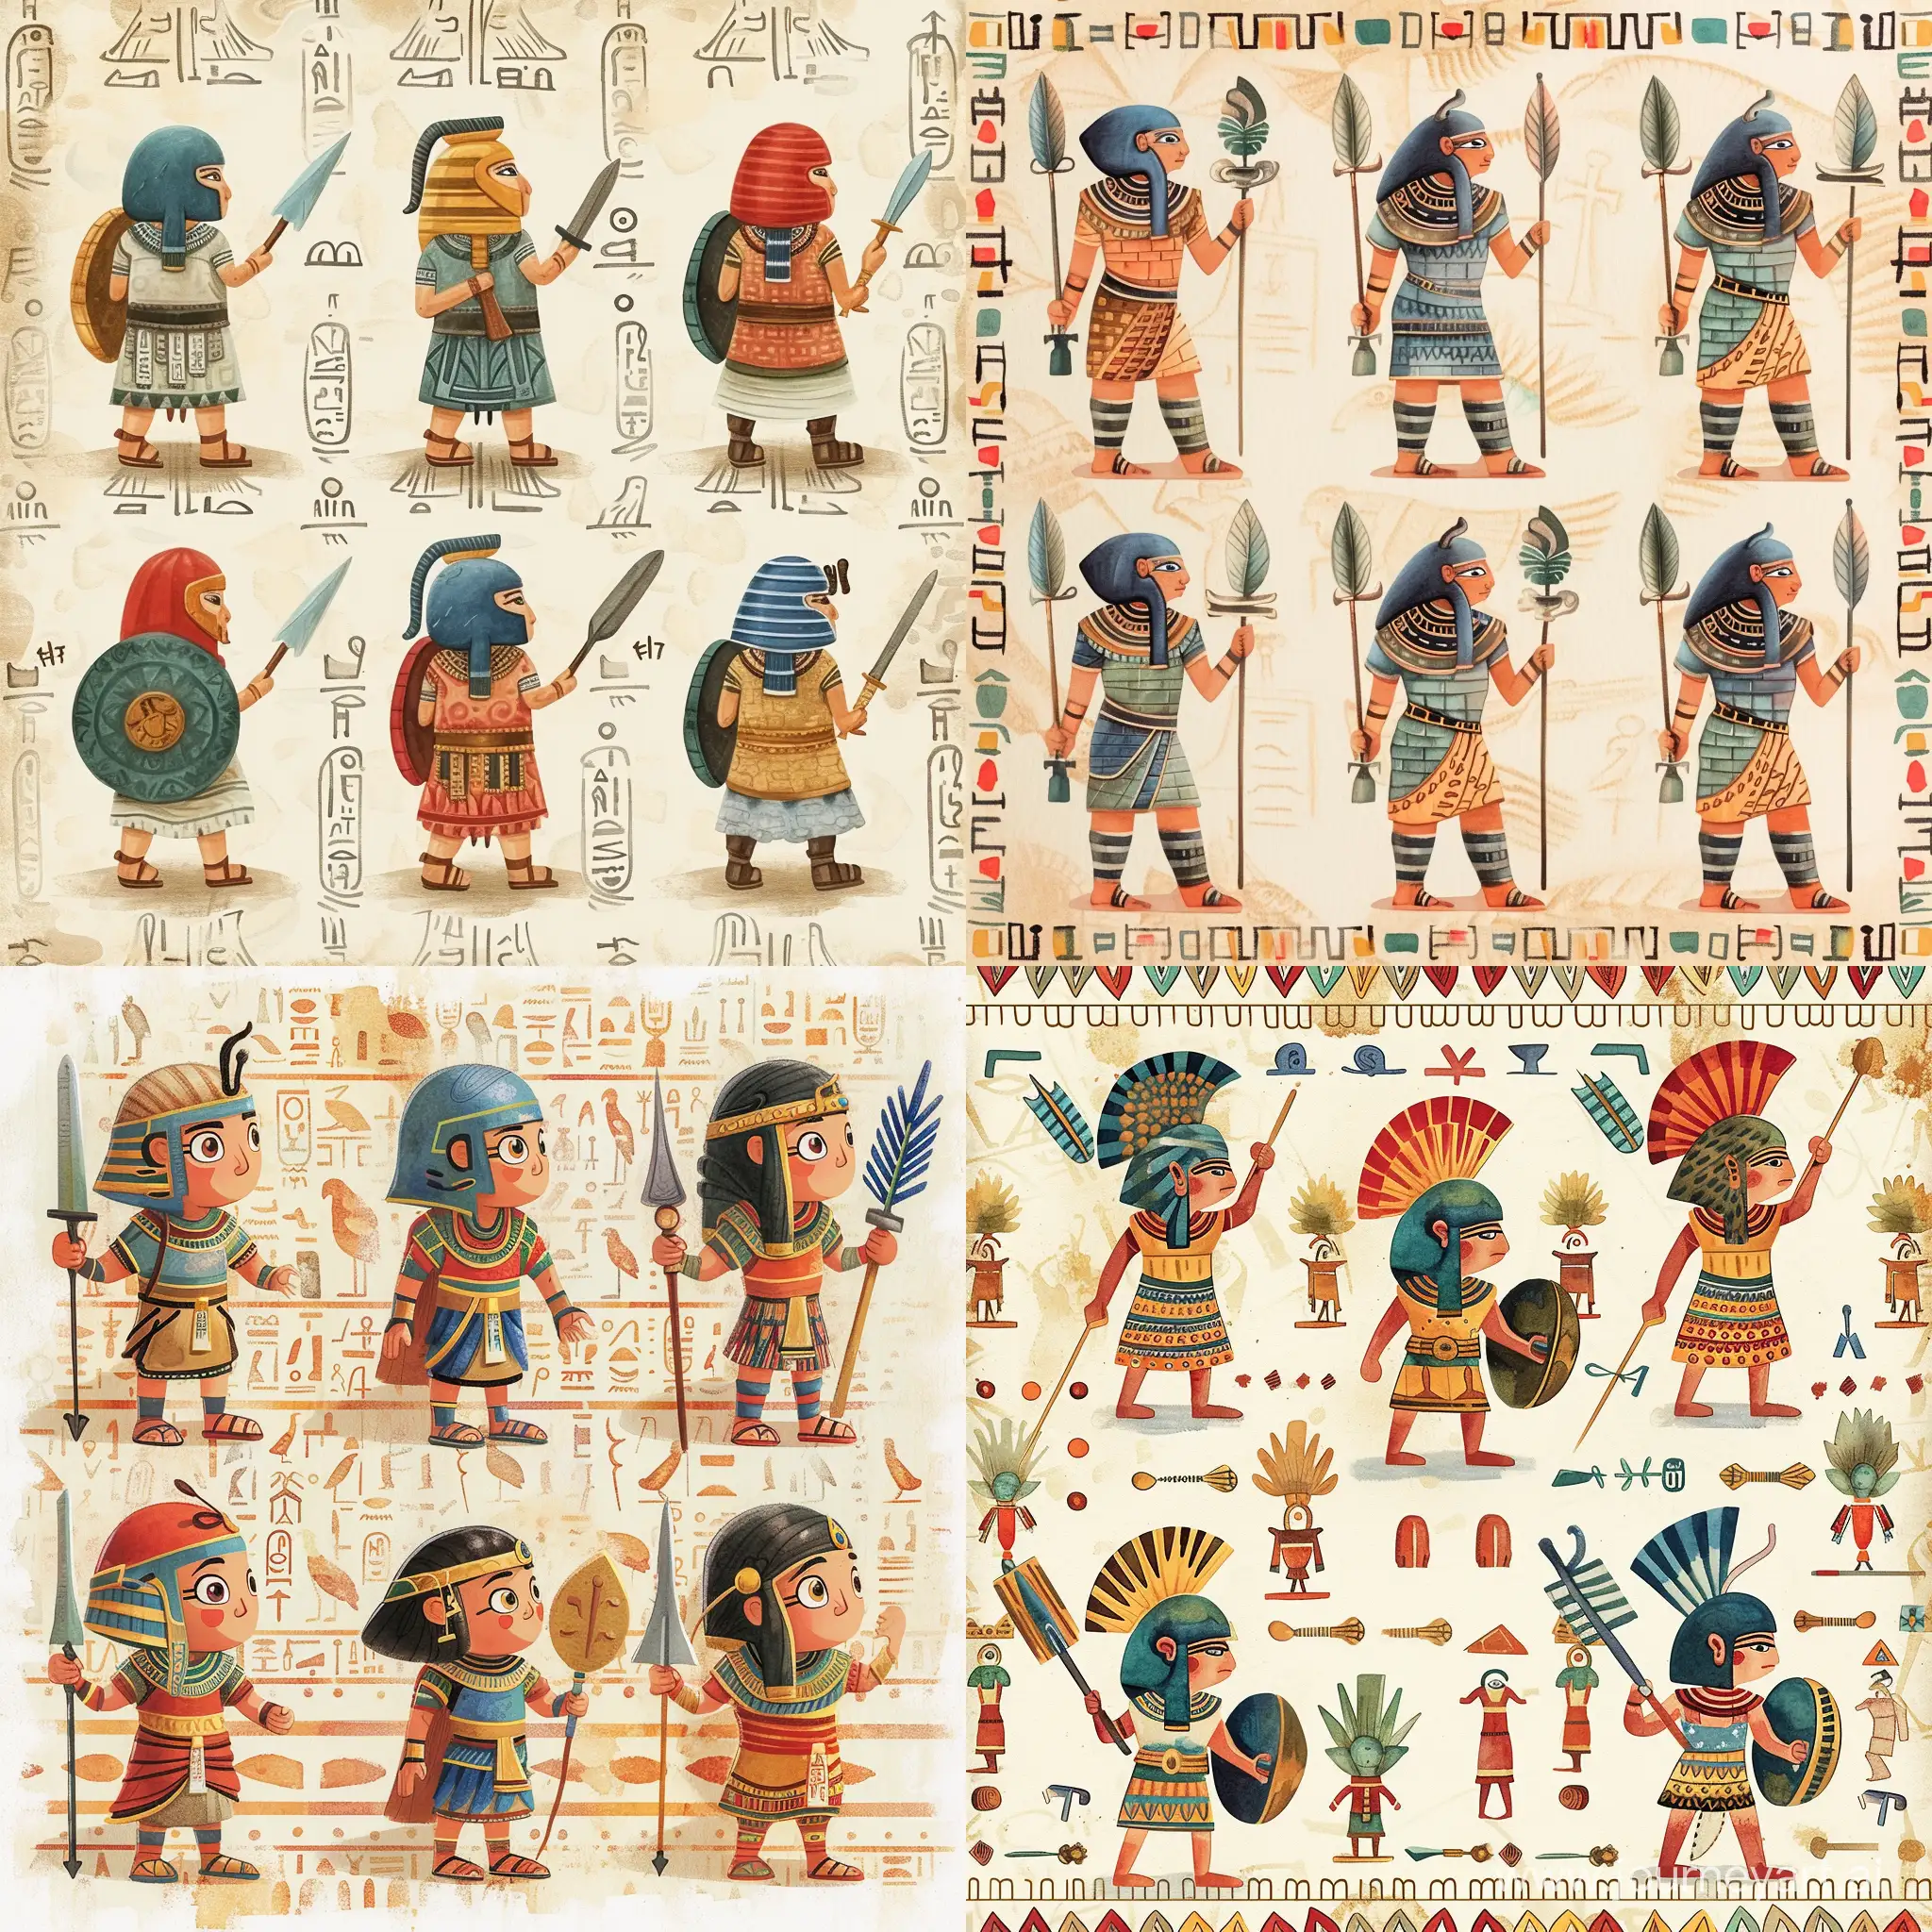 Ancient-Egypt-Warriors-Stylized-Caricature-Illustration